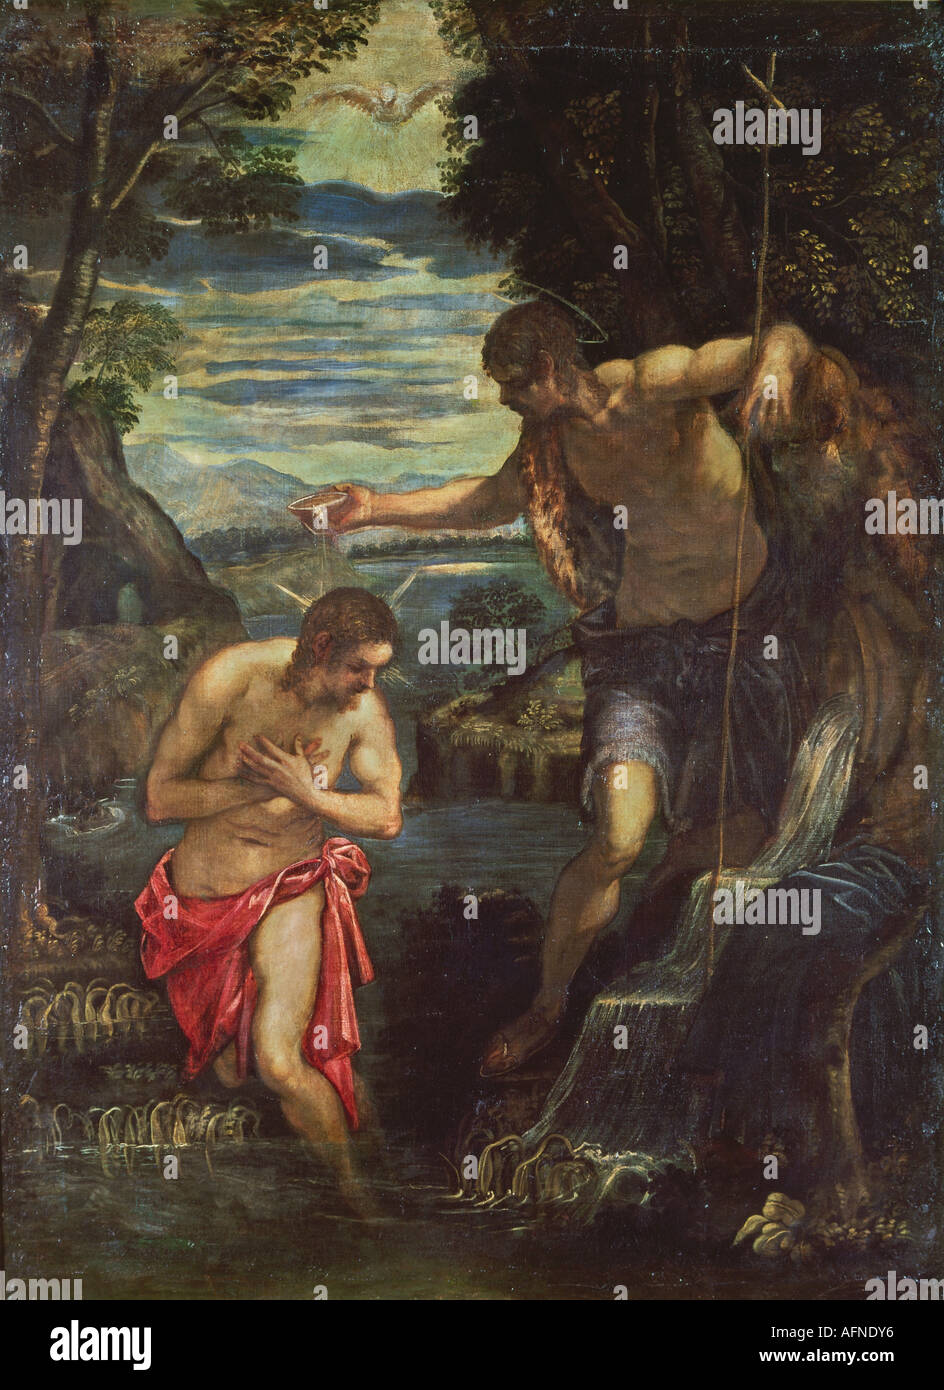 Bildende Kunst, Jesus Christus, Malerei,"Taufe Christi", Öl auf Leinwand,  105x137cm, Tintoretto, (1518-1594), Prado, Madrid, R Stockfotografie - Alamy